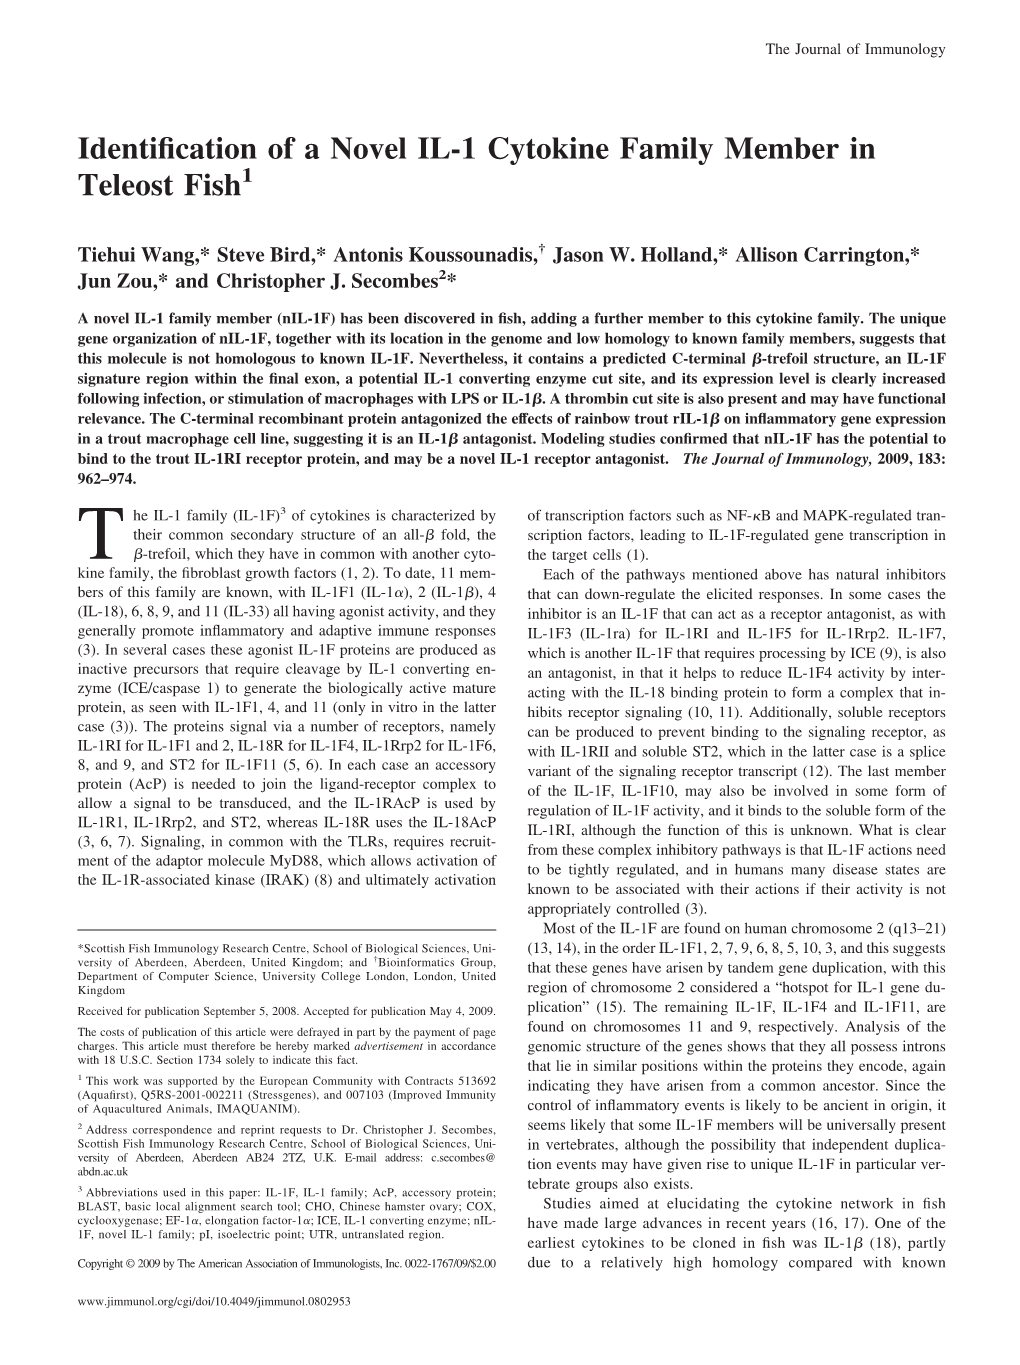 Family Member in Teleost Fish Identification of a Novel IL-1 Cytokine